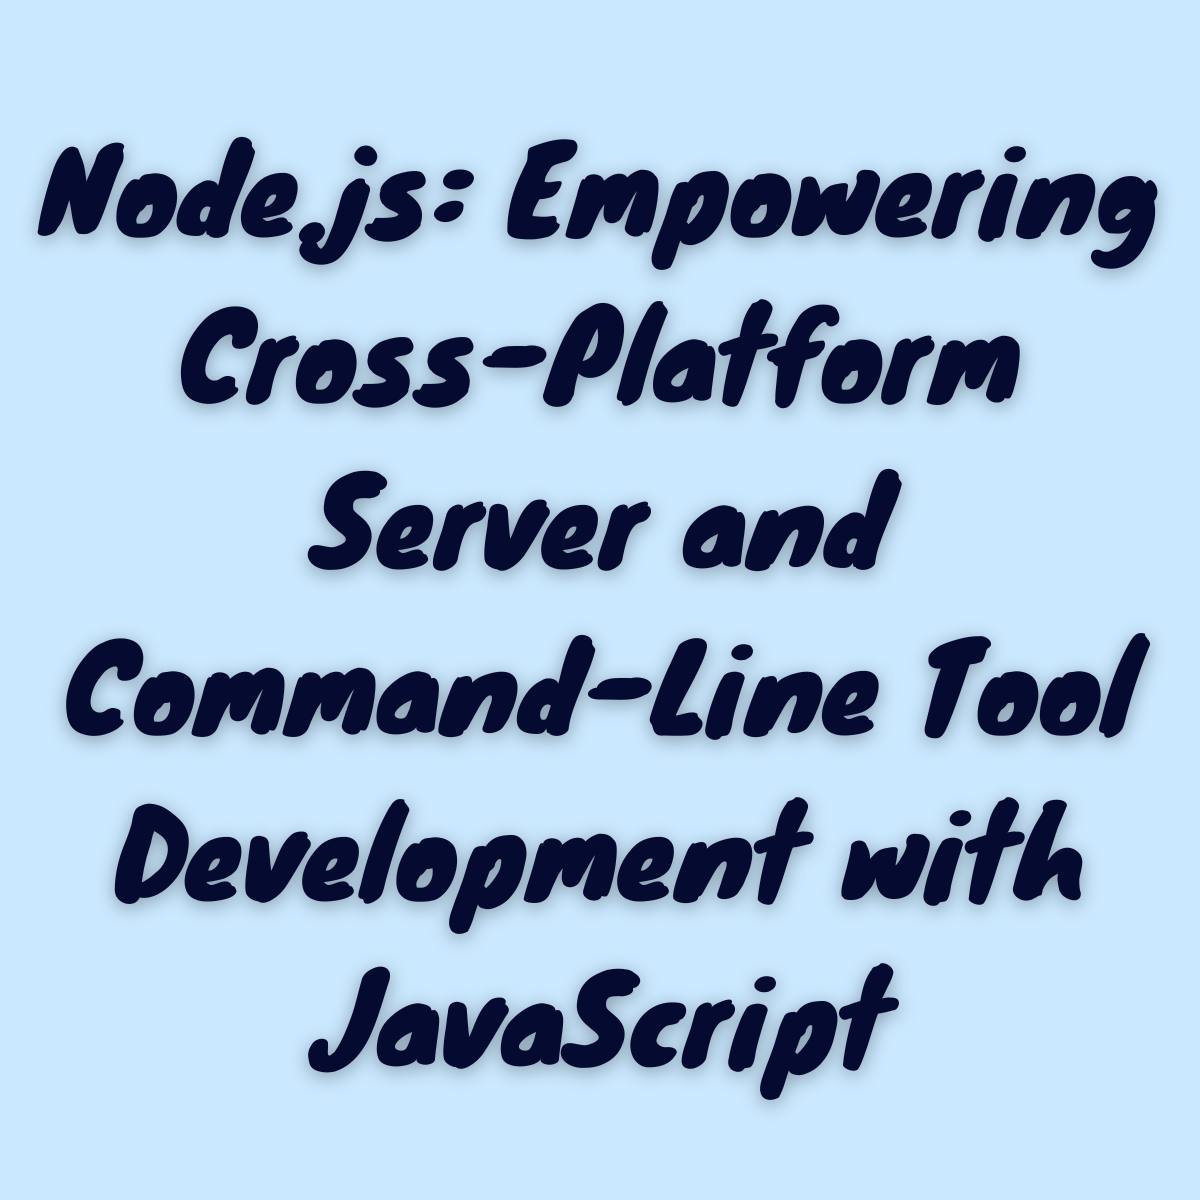 Node.js: Empowering Cross-Platform Server and Command-Line Tool Development with JavaScript